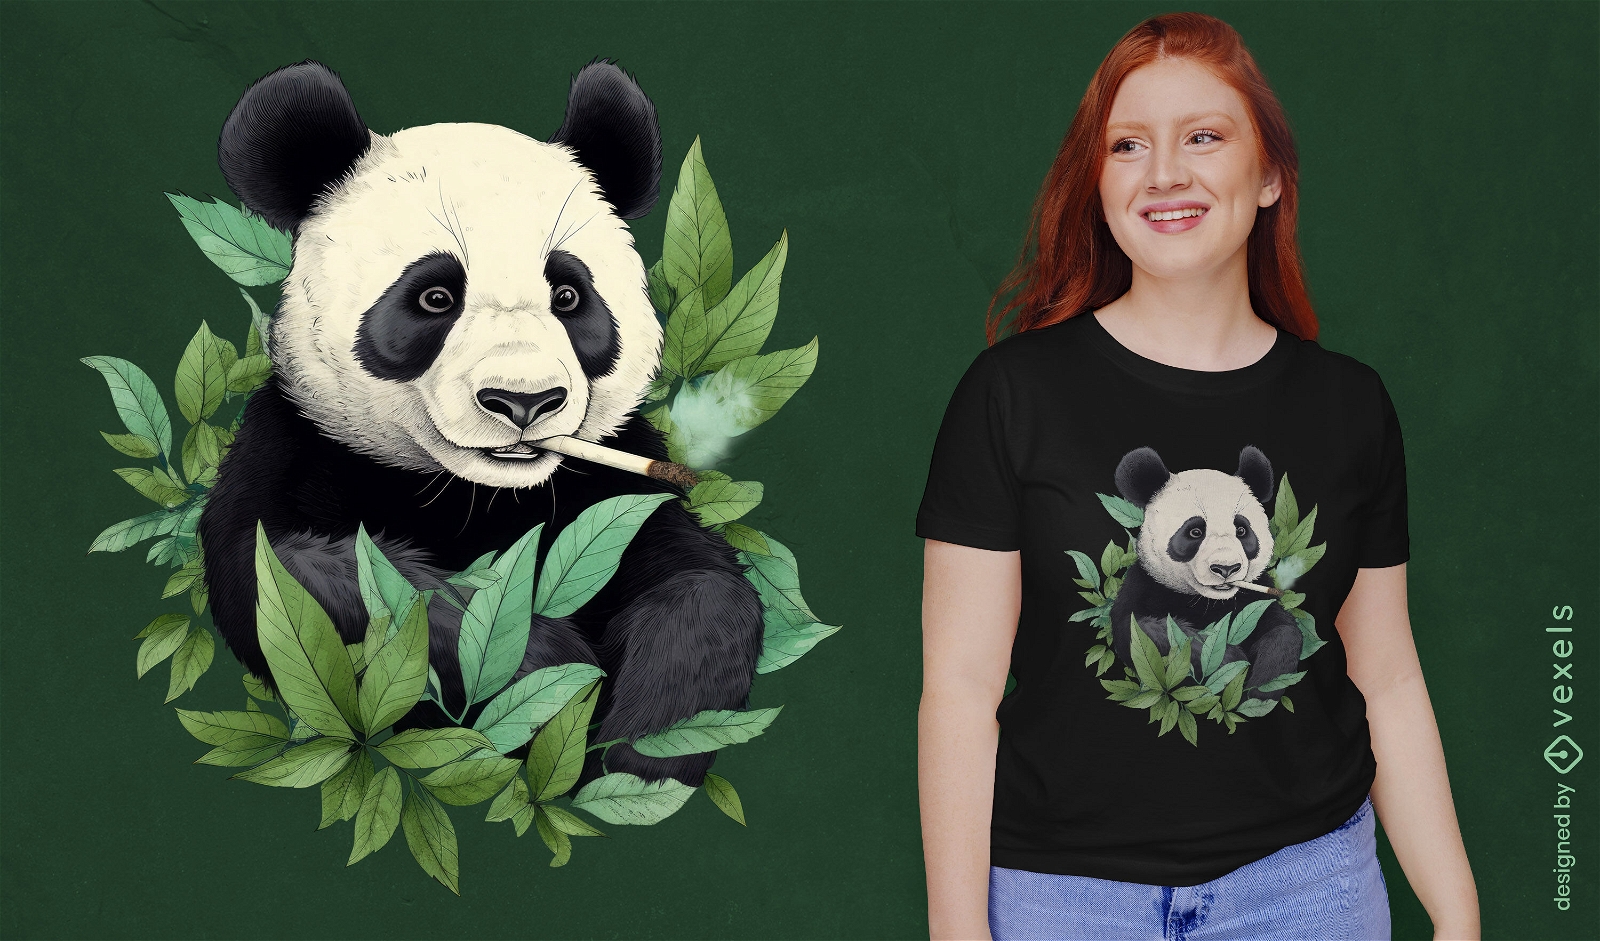 Pandab?r rauchendes T-Shirt-Design